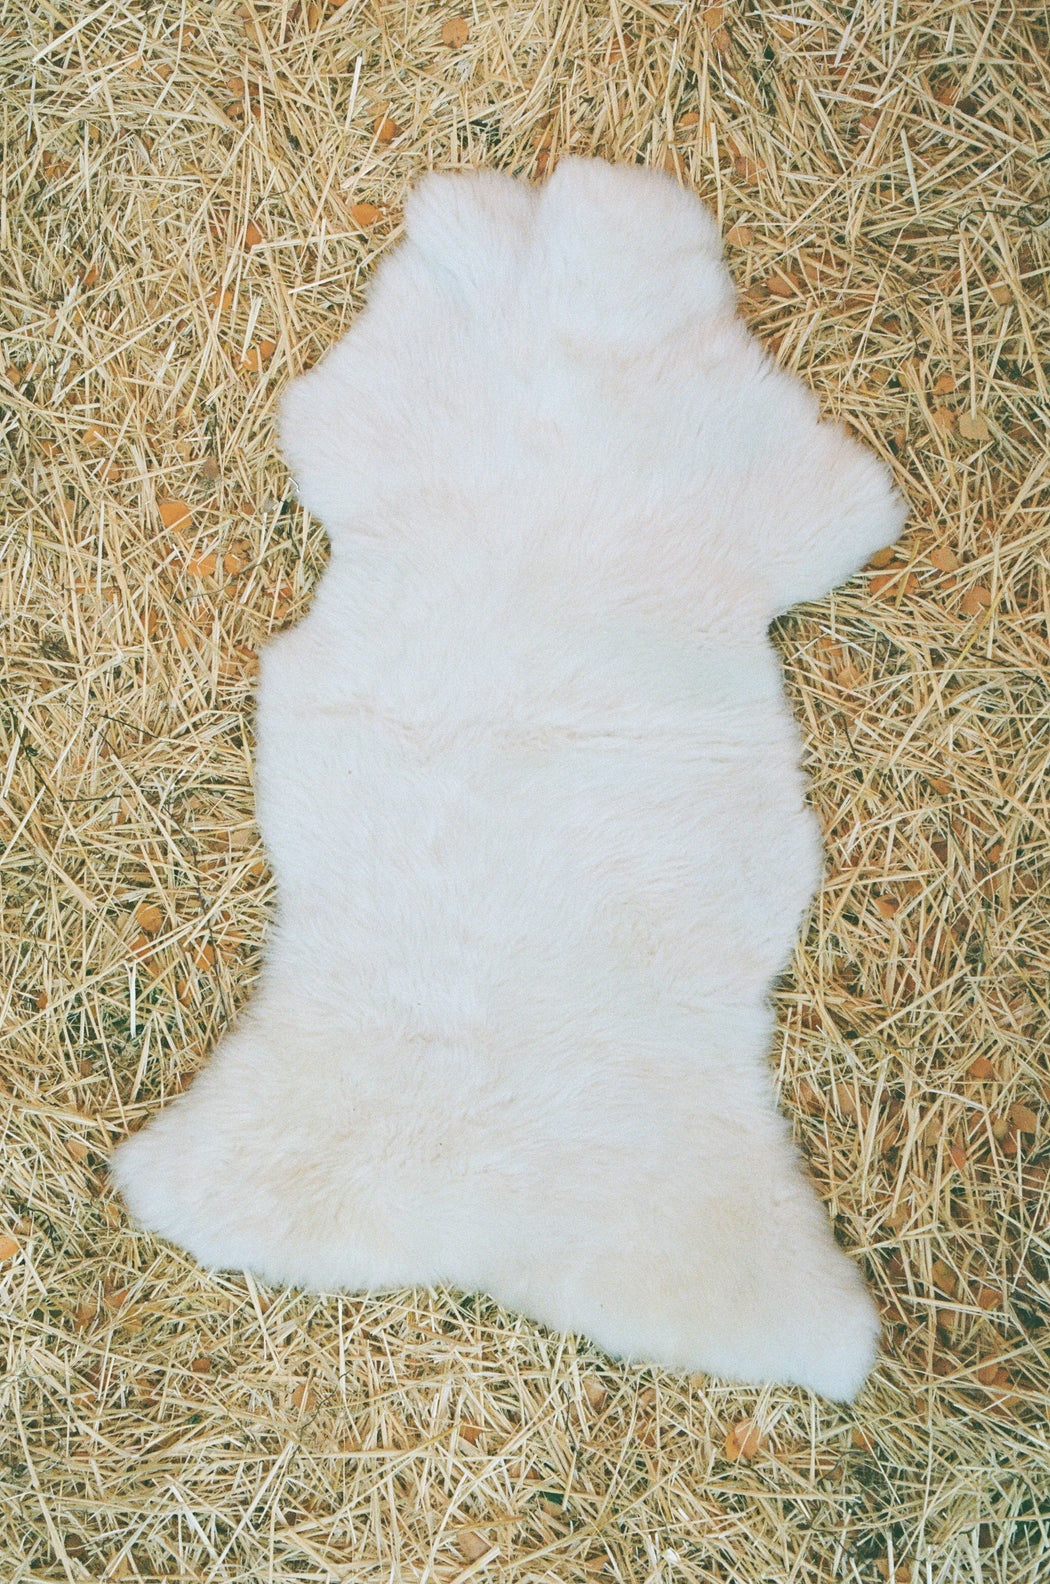 Medium Canadian Sheepskin - shaggy white